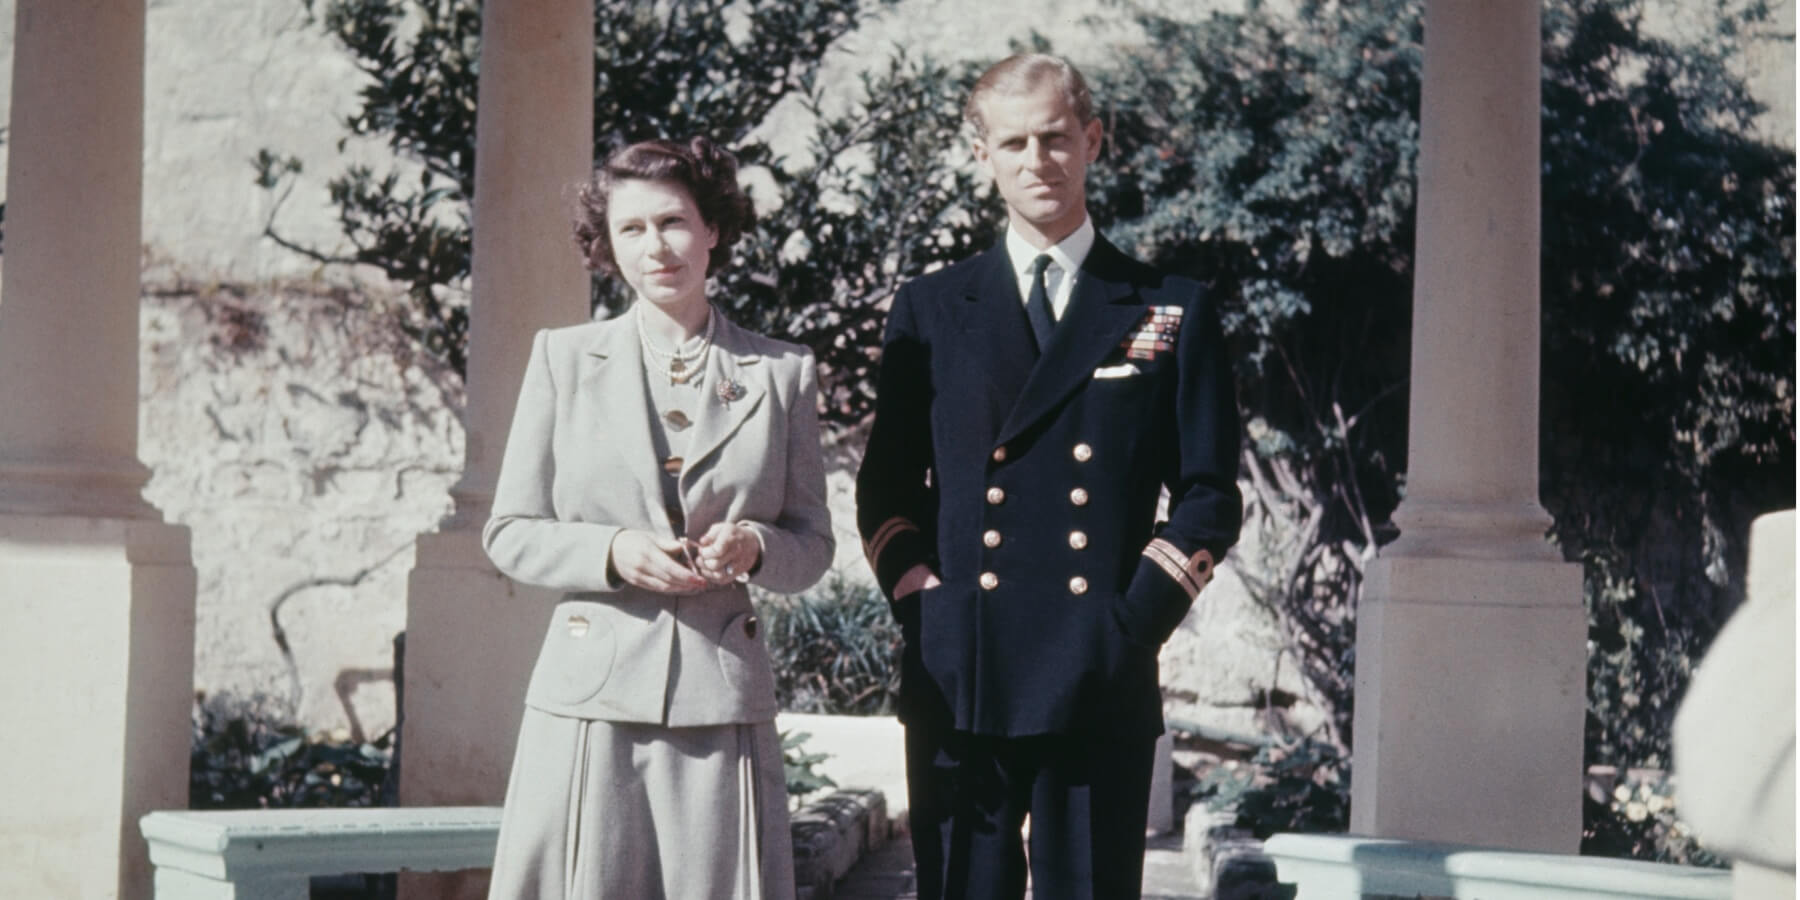 Queen Elizabeth and Prince Philip photographed outside of Villa Guardamangia in Malta.